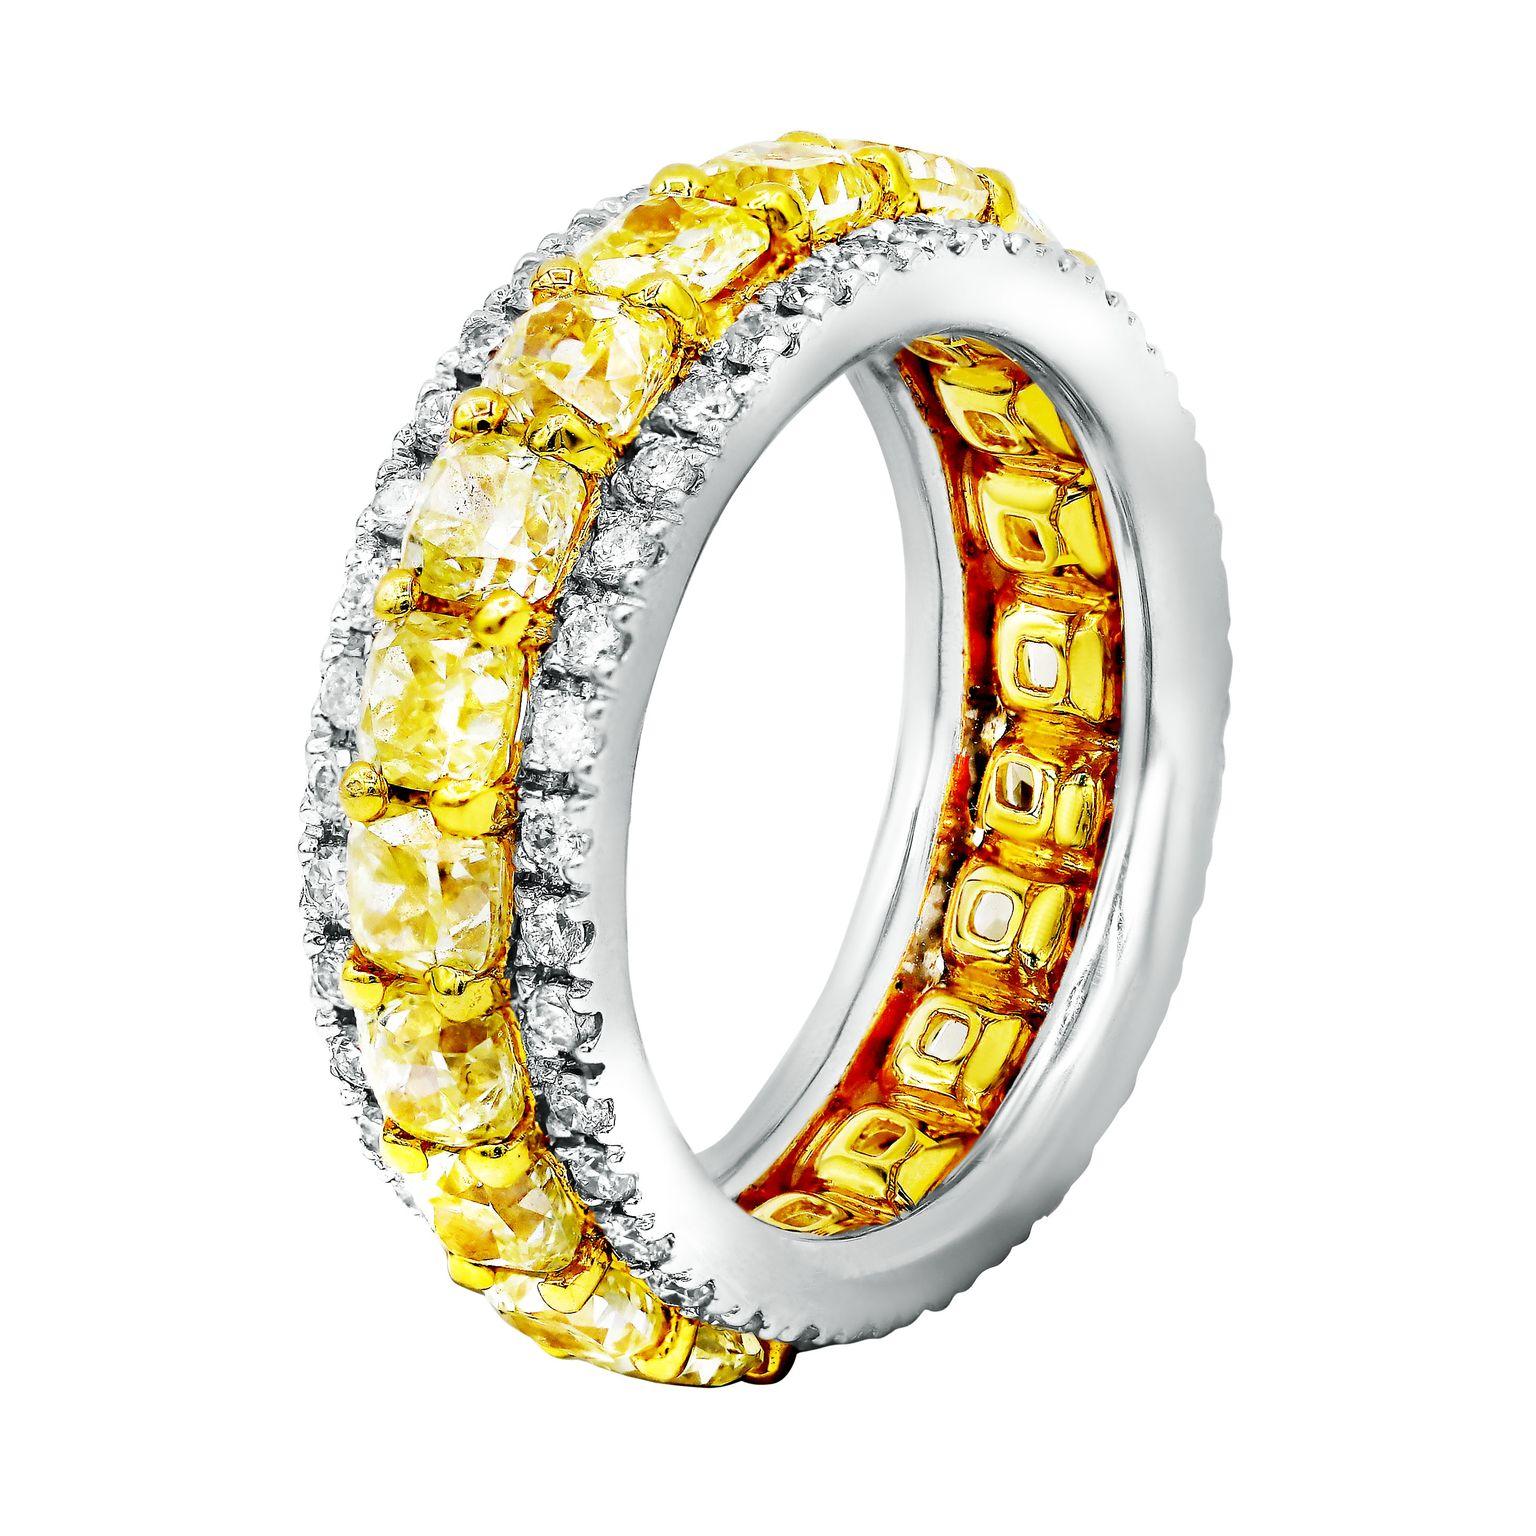 18kt yellow and white gold diamond band featuring 4.26 cts of yellow diamonds and 0.72 cts of white diamonds 